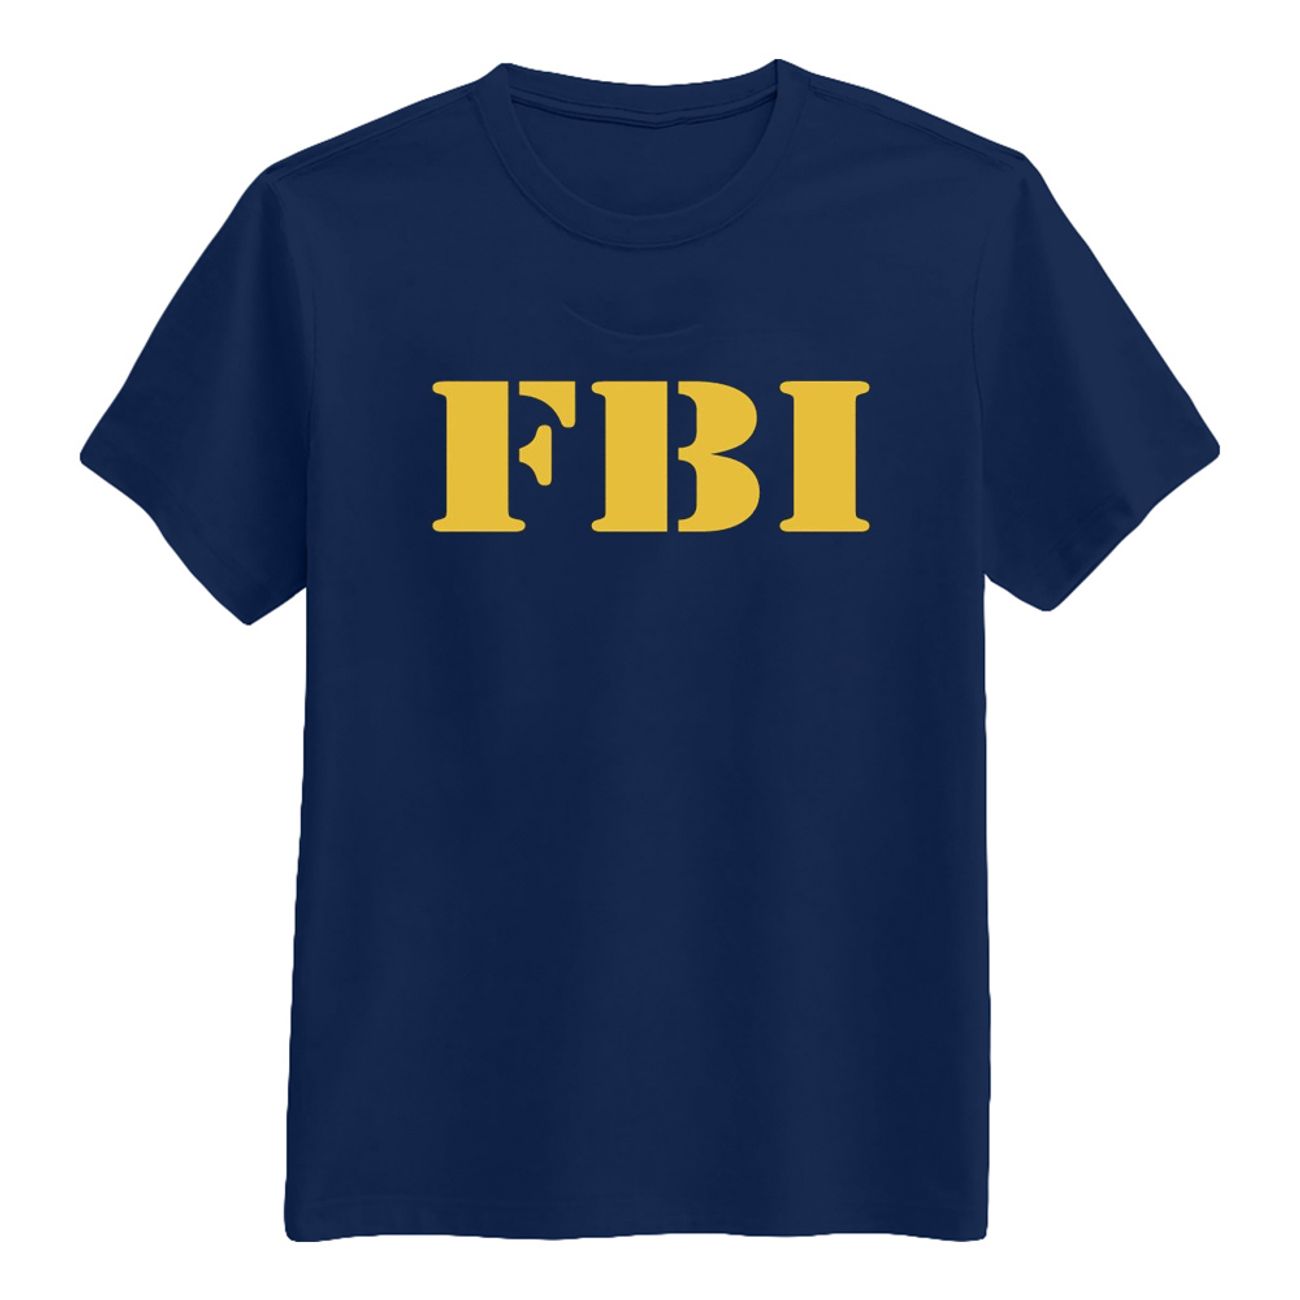 fbi-t-shirt-77474-1